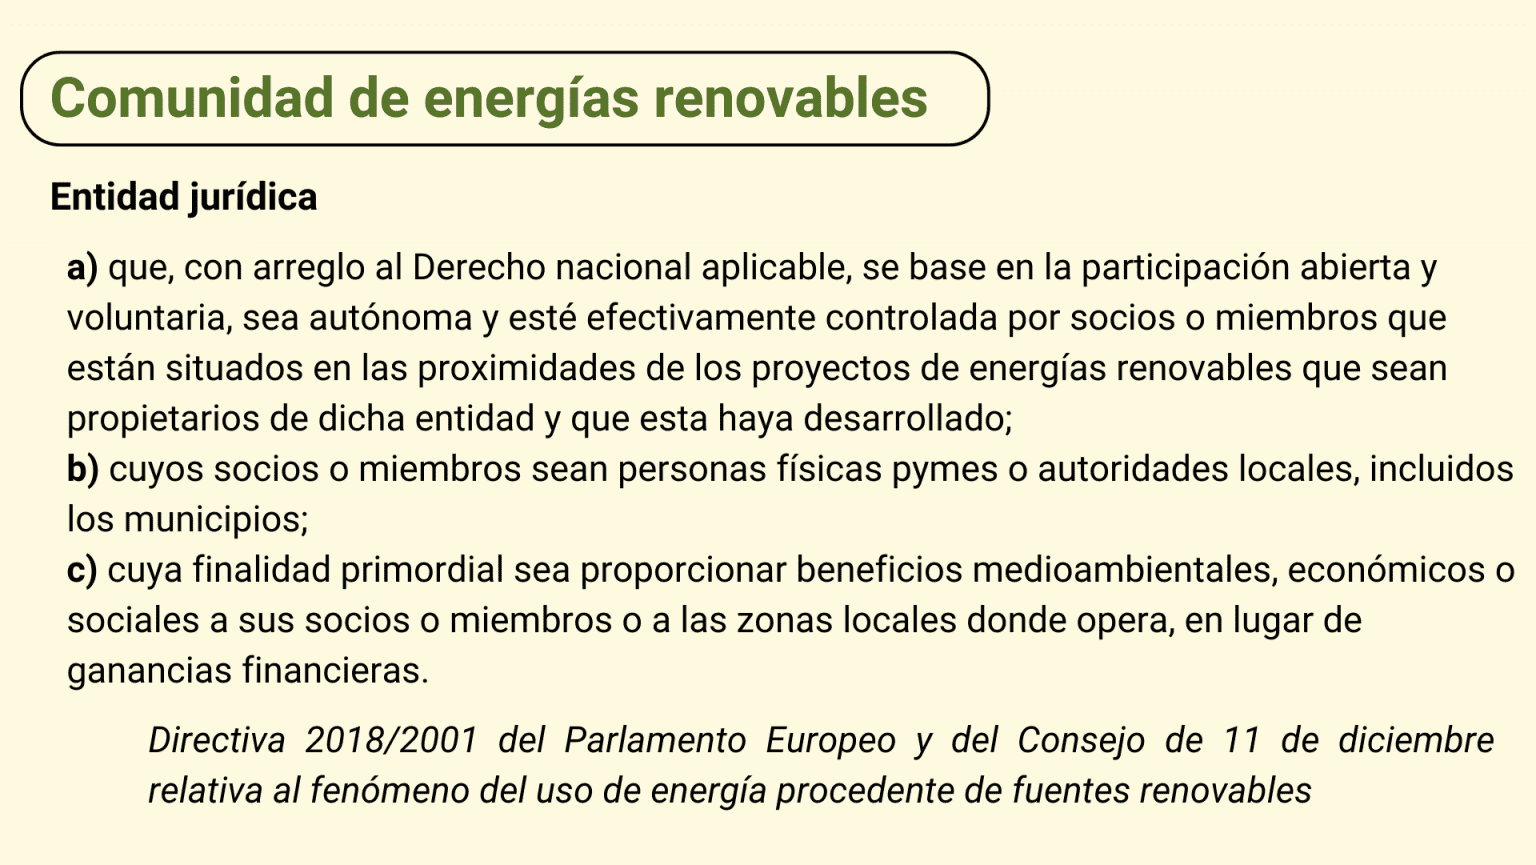 Definición de comunidades energéticas